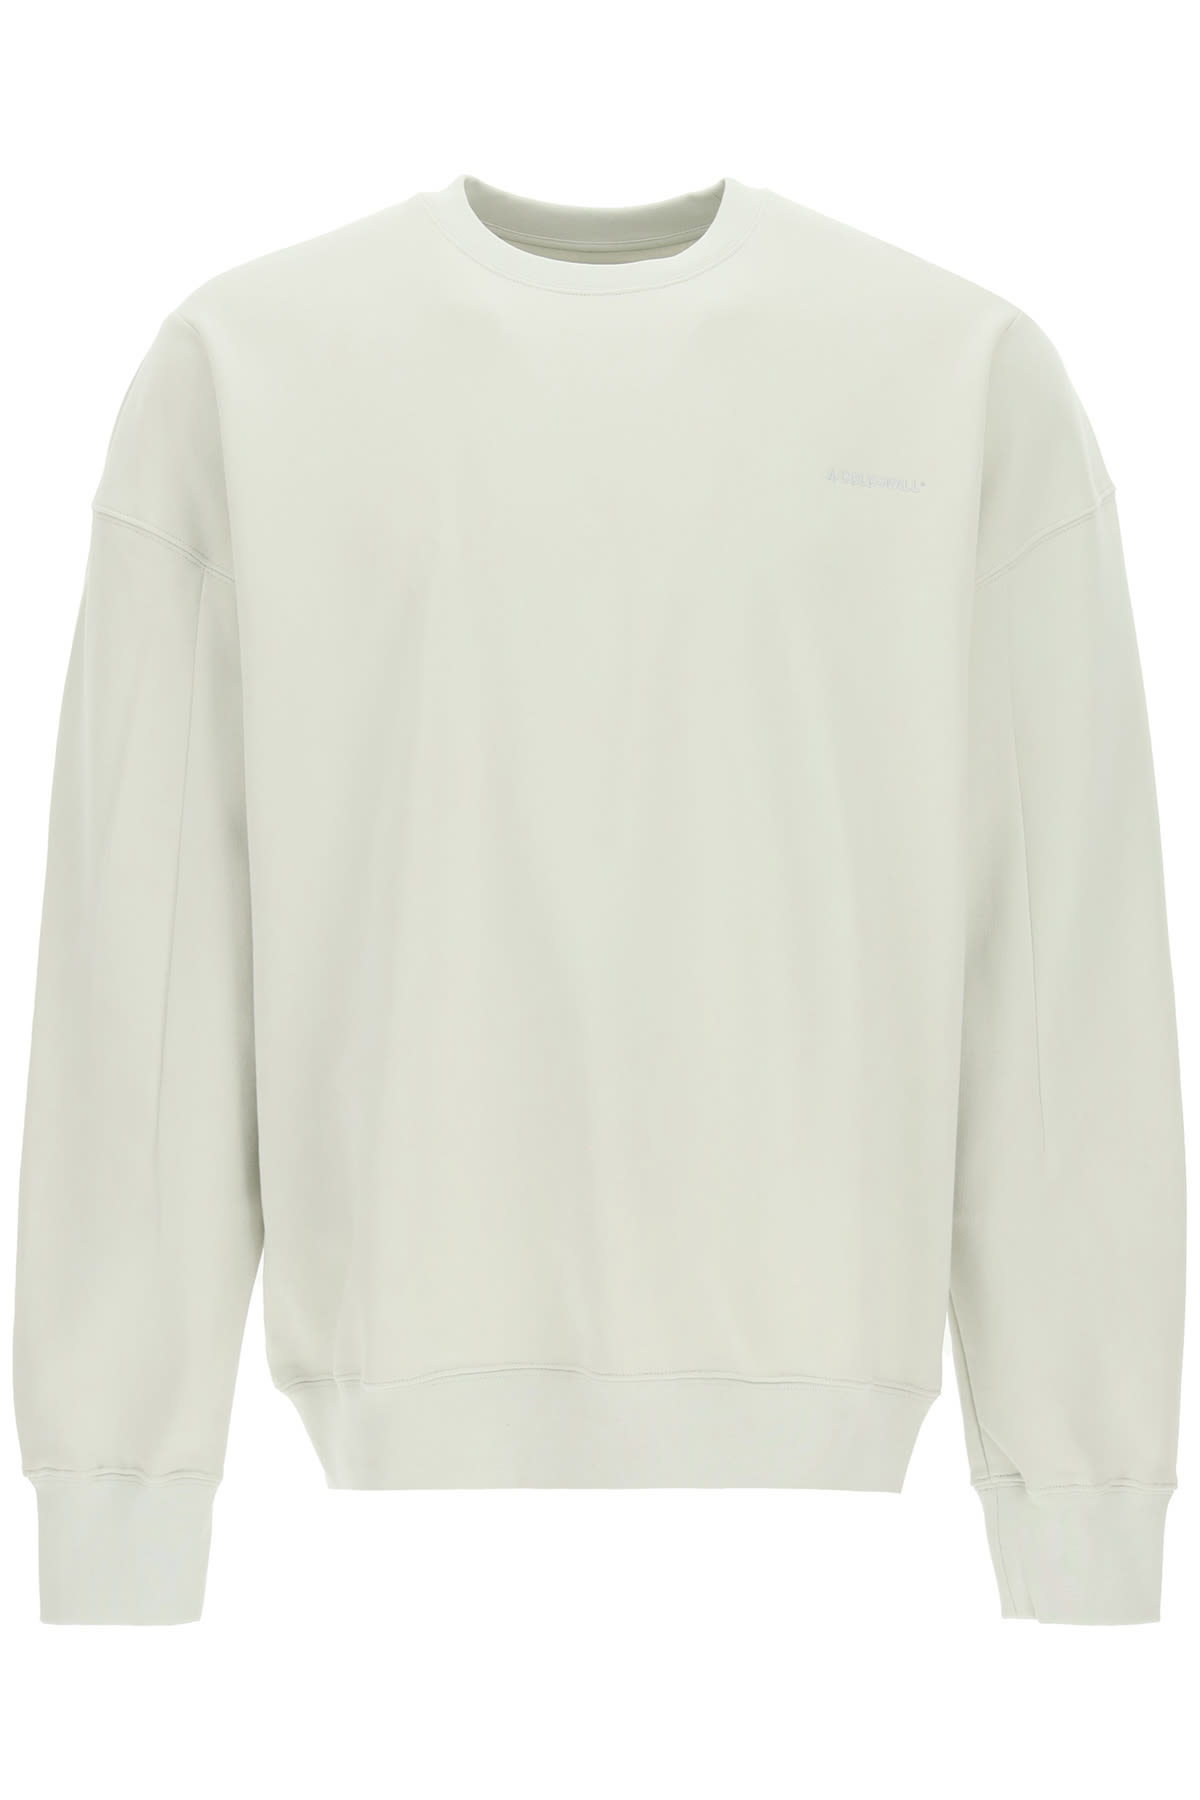 A-COLD-WALL Loopback Cotton Sweatshirt